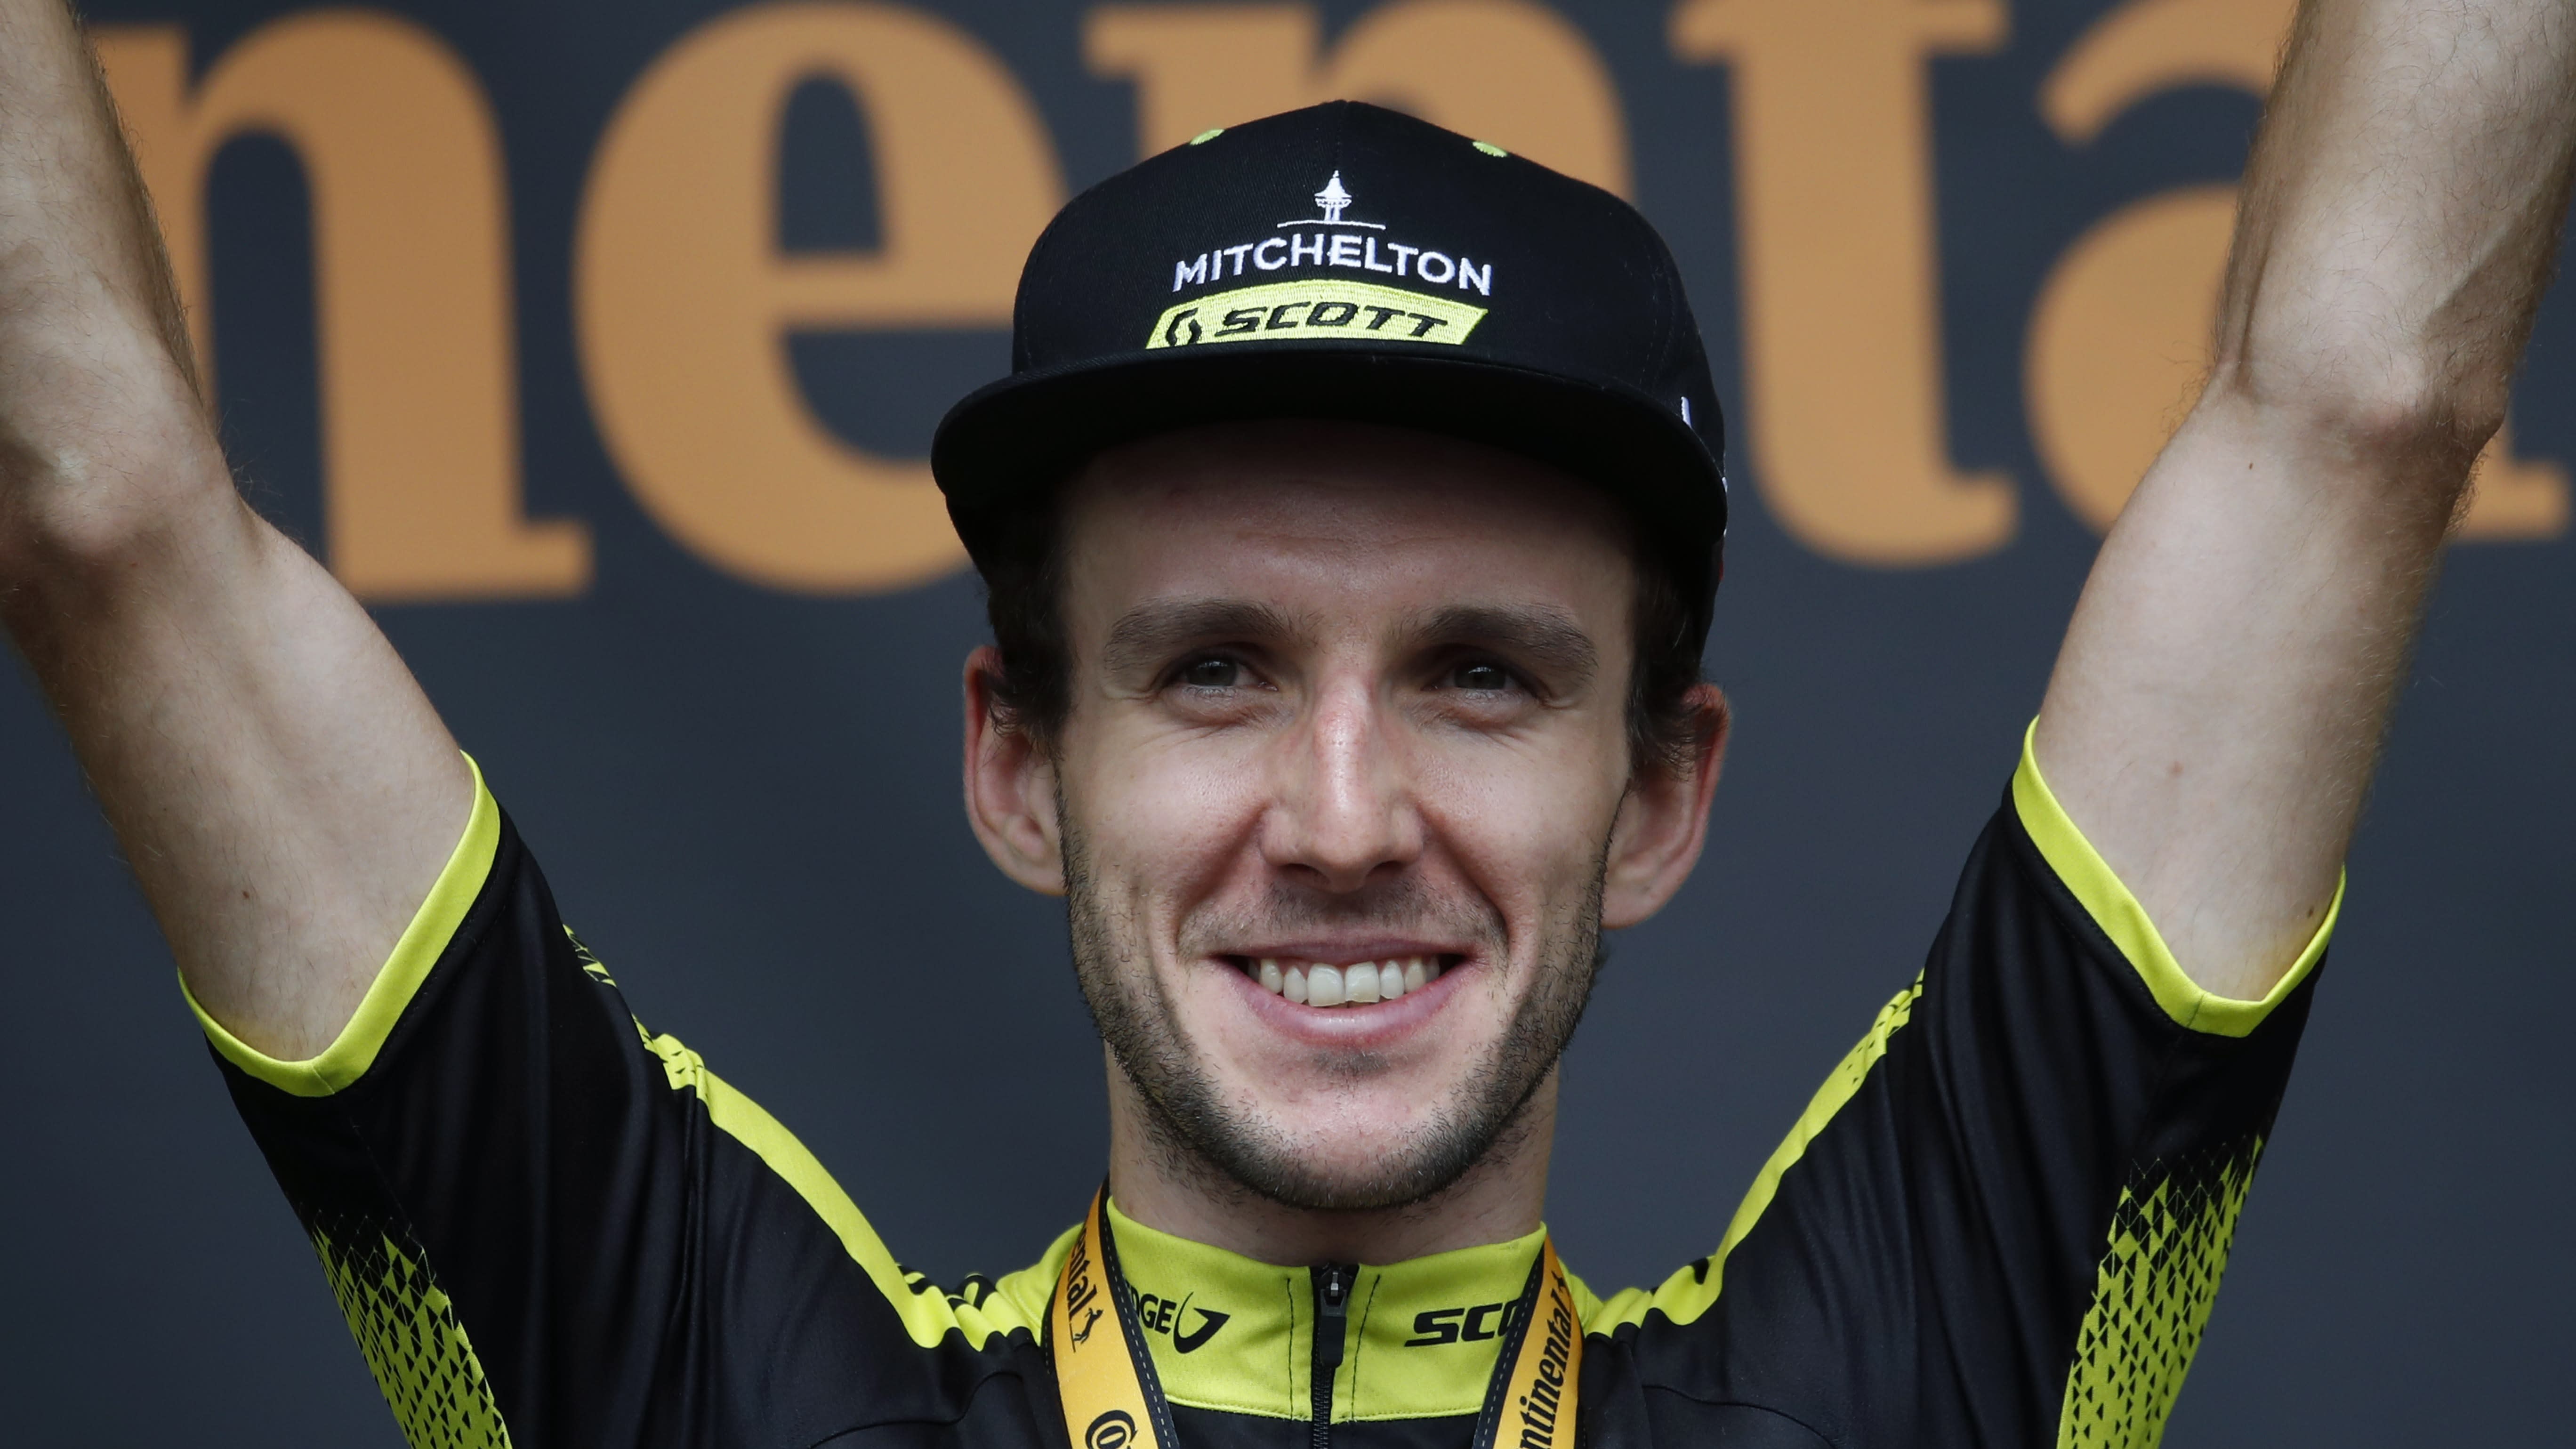 Simon Yates enjoys success with first Tour de France stage win